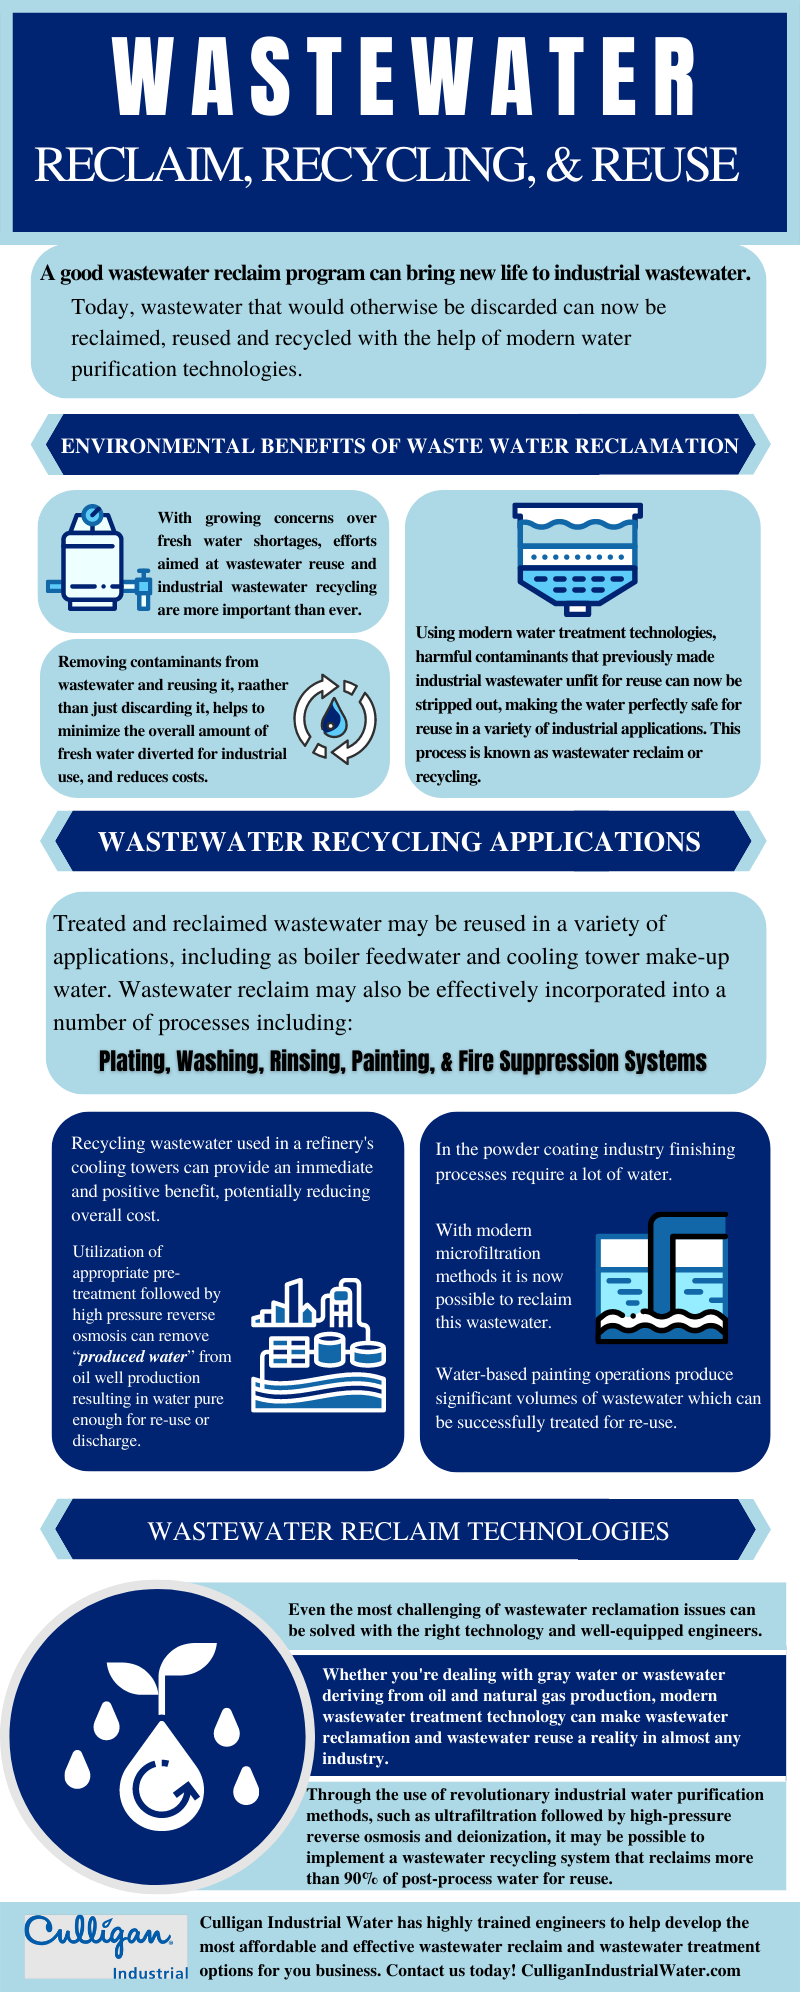 Wastewater Reclaim | Visual.ly